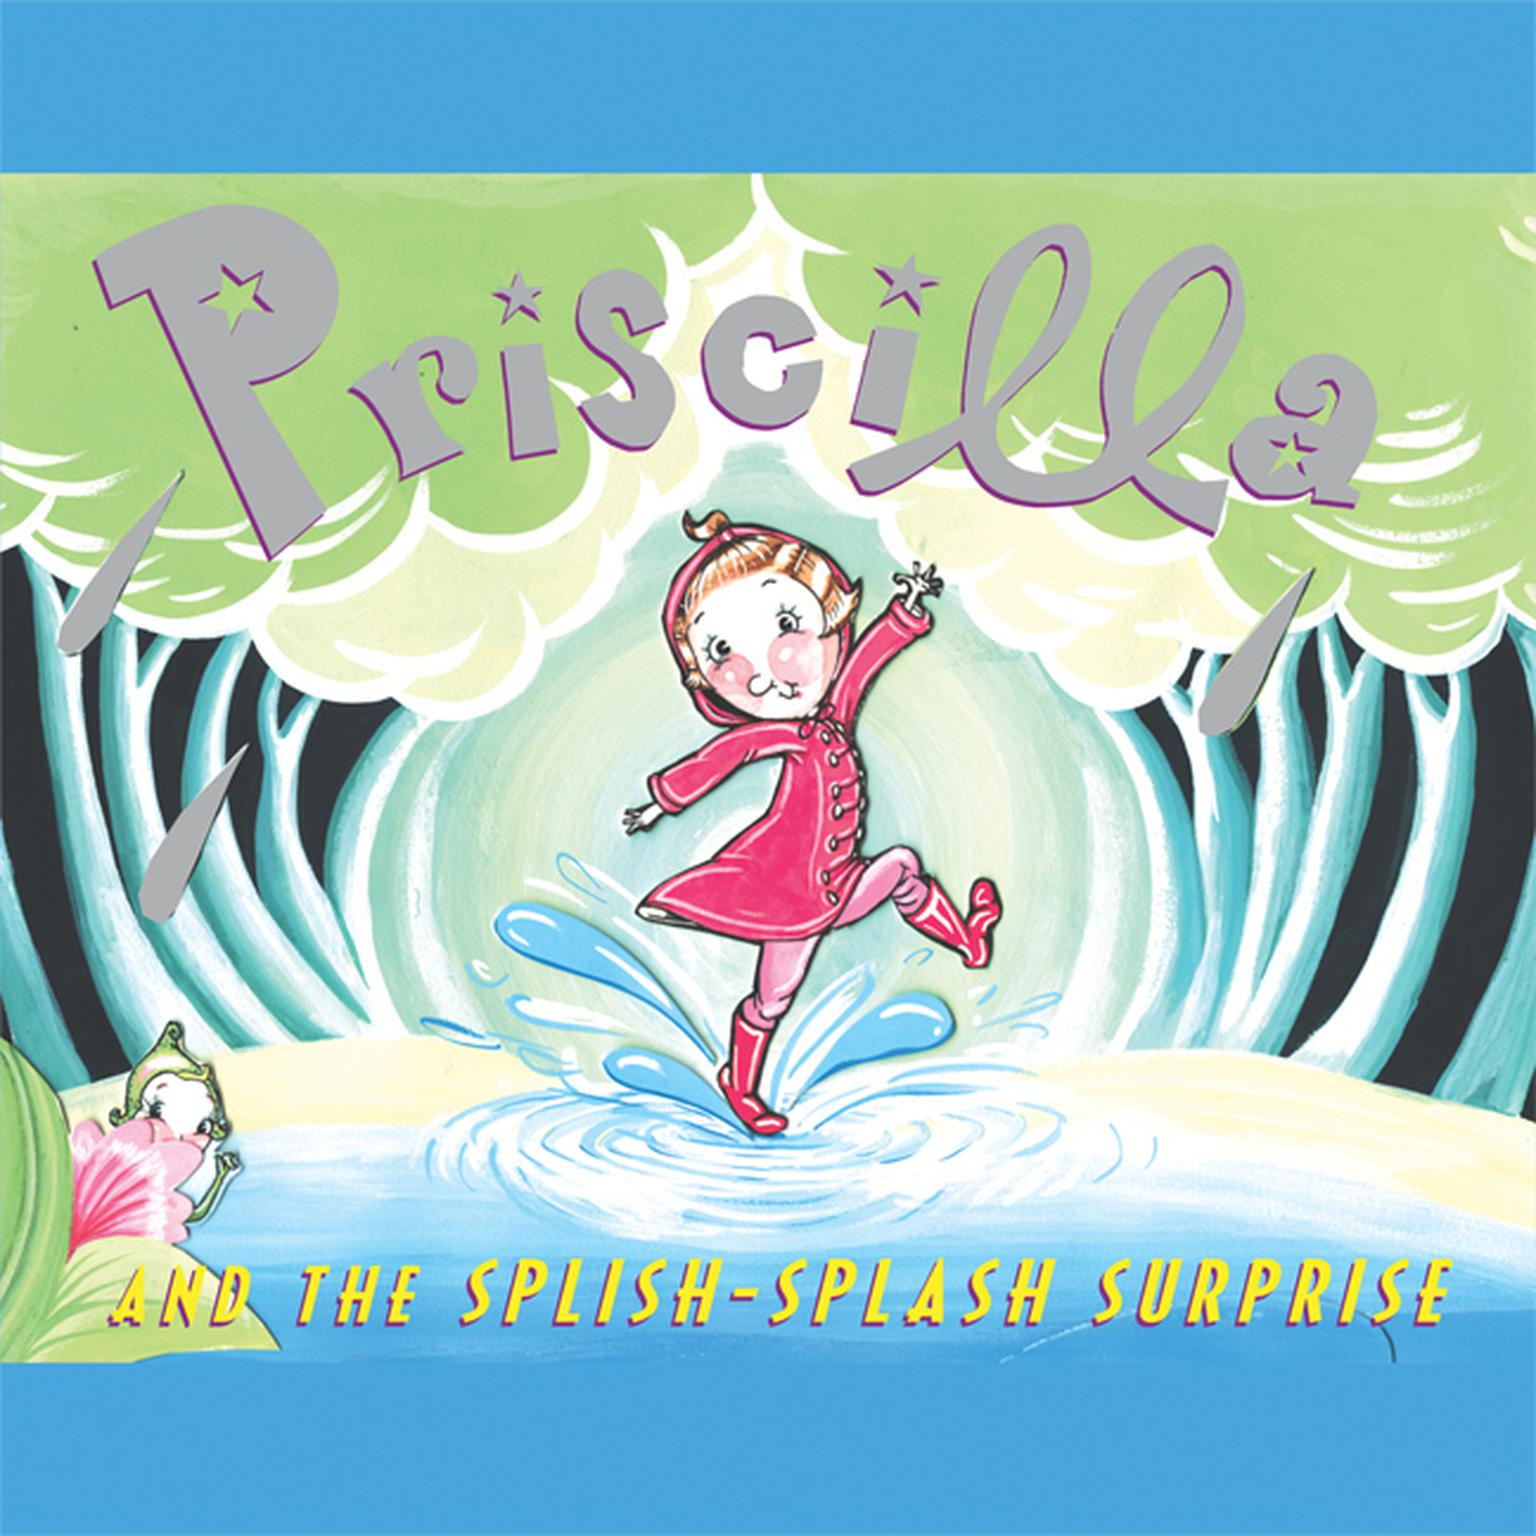 Priscilla and the Splish-Splash Surprise Audiobook, by Nathaniel Hobbie